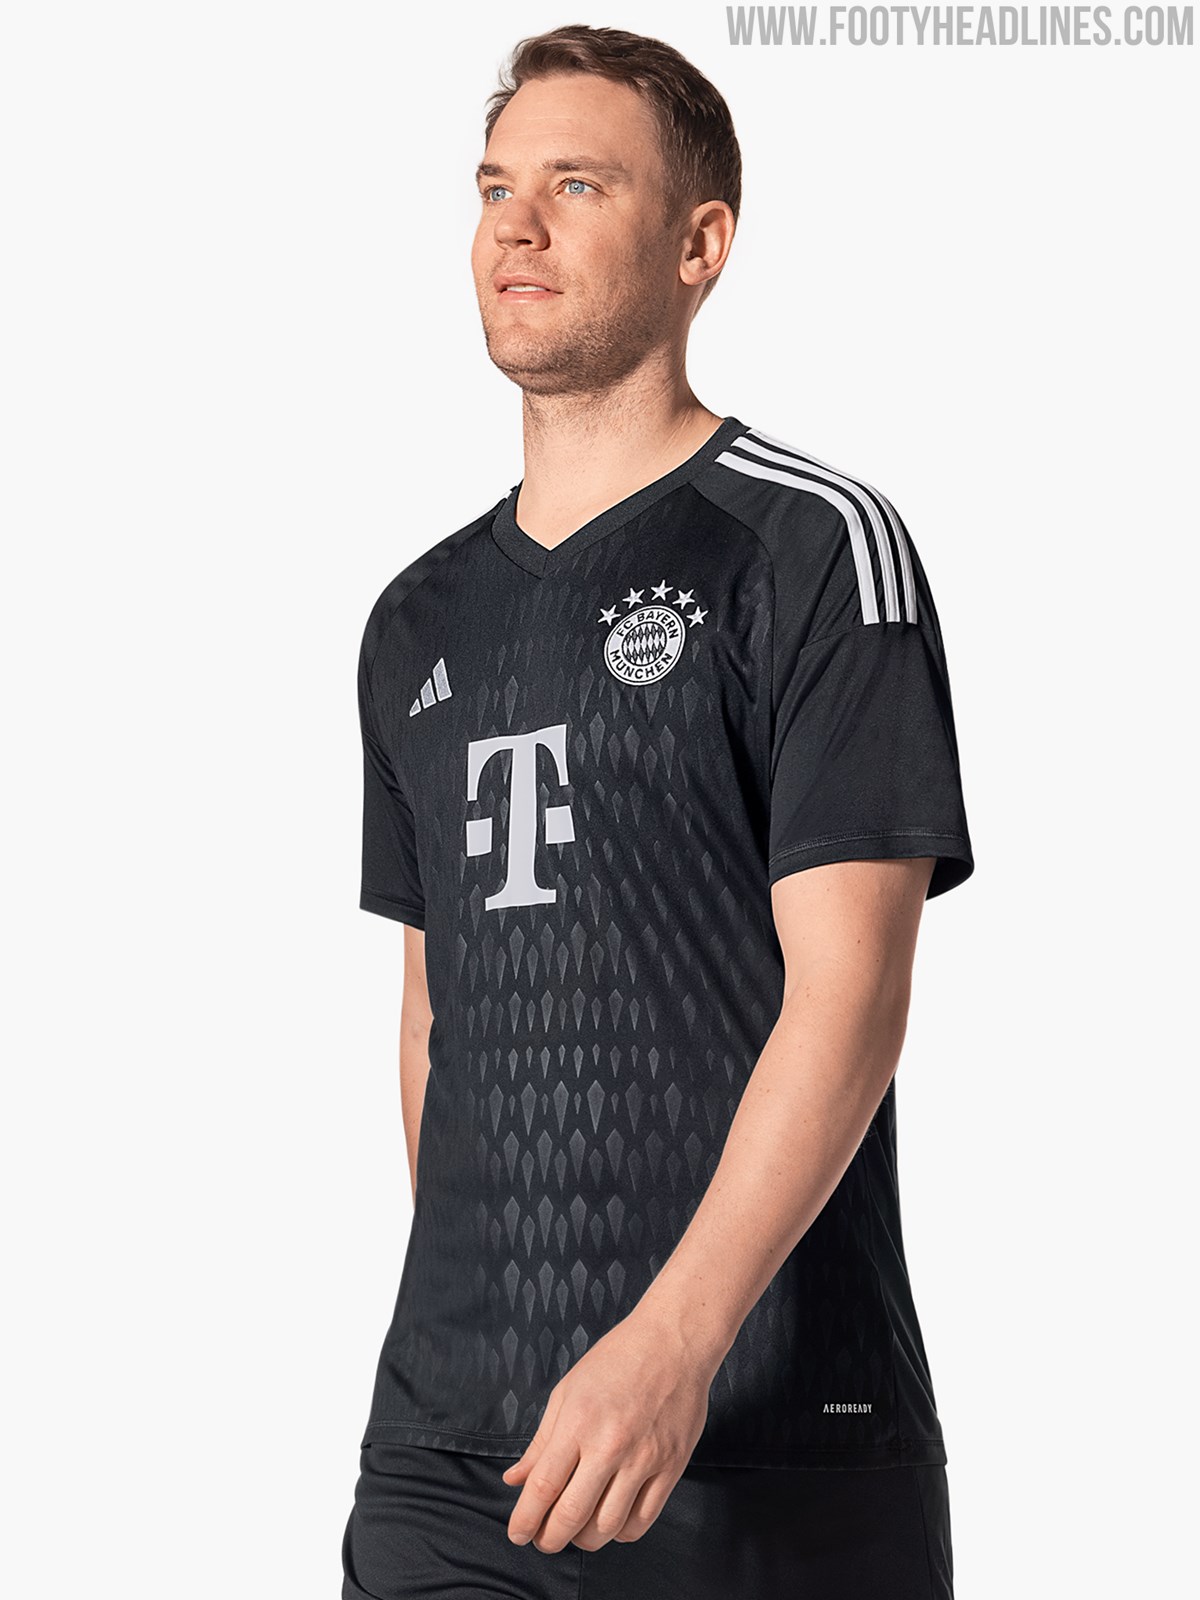 Same as Arsenal: Bayern München 23-24 Goalkeeper Kit Released - Footy ...